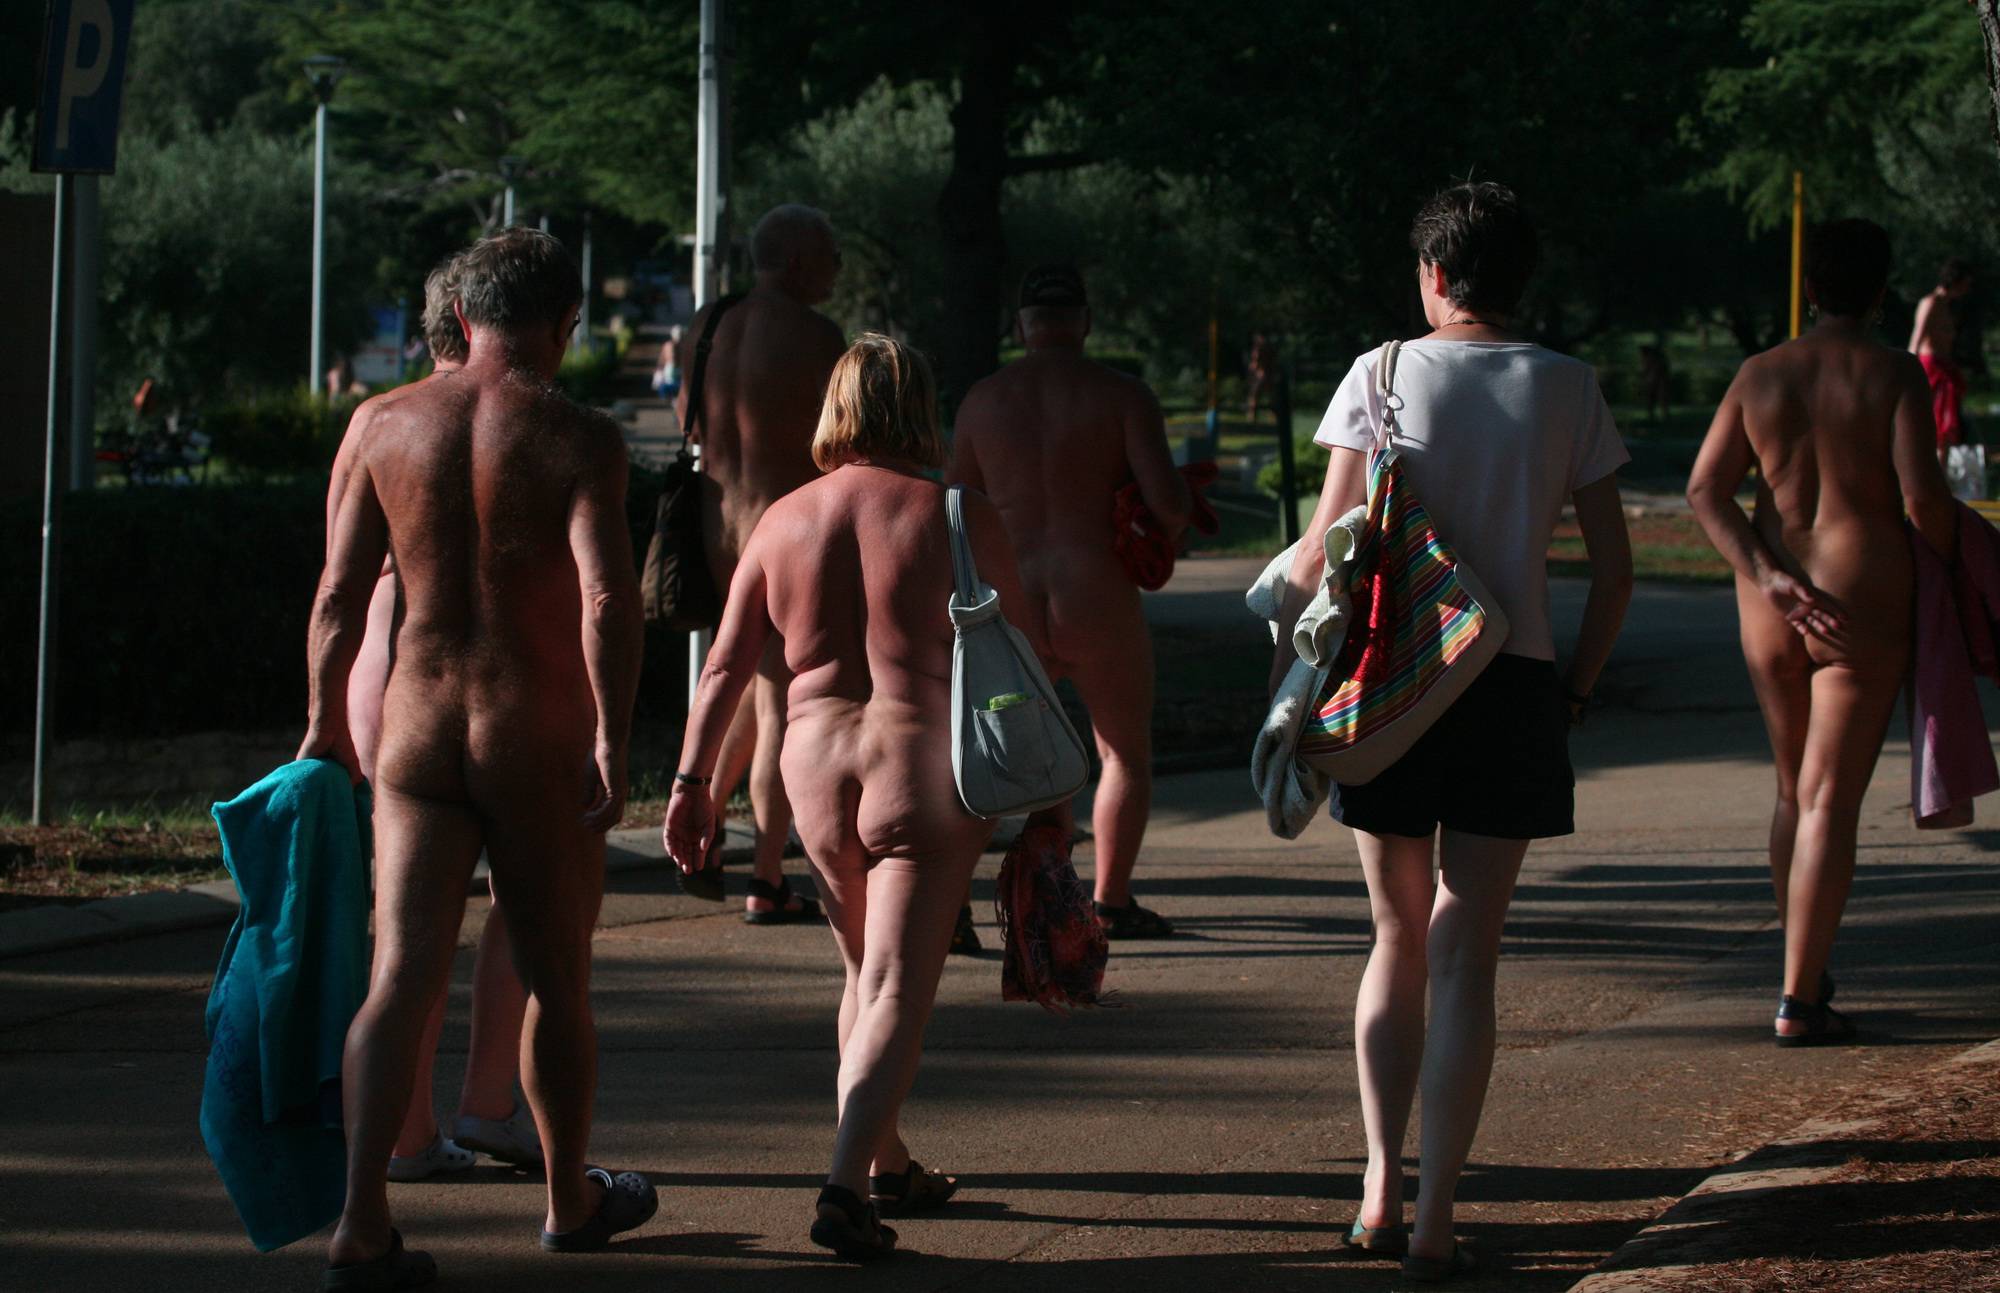 Nudist Park Sidewalk Shot - 3